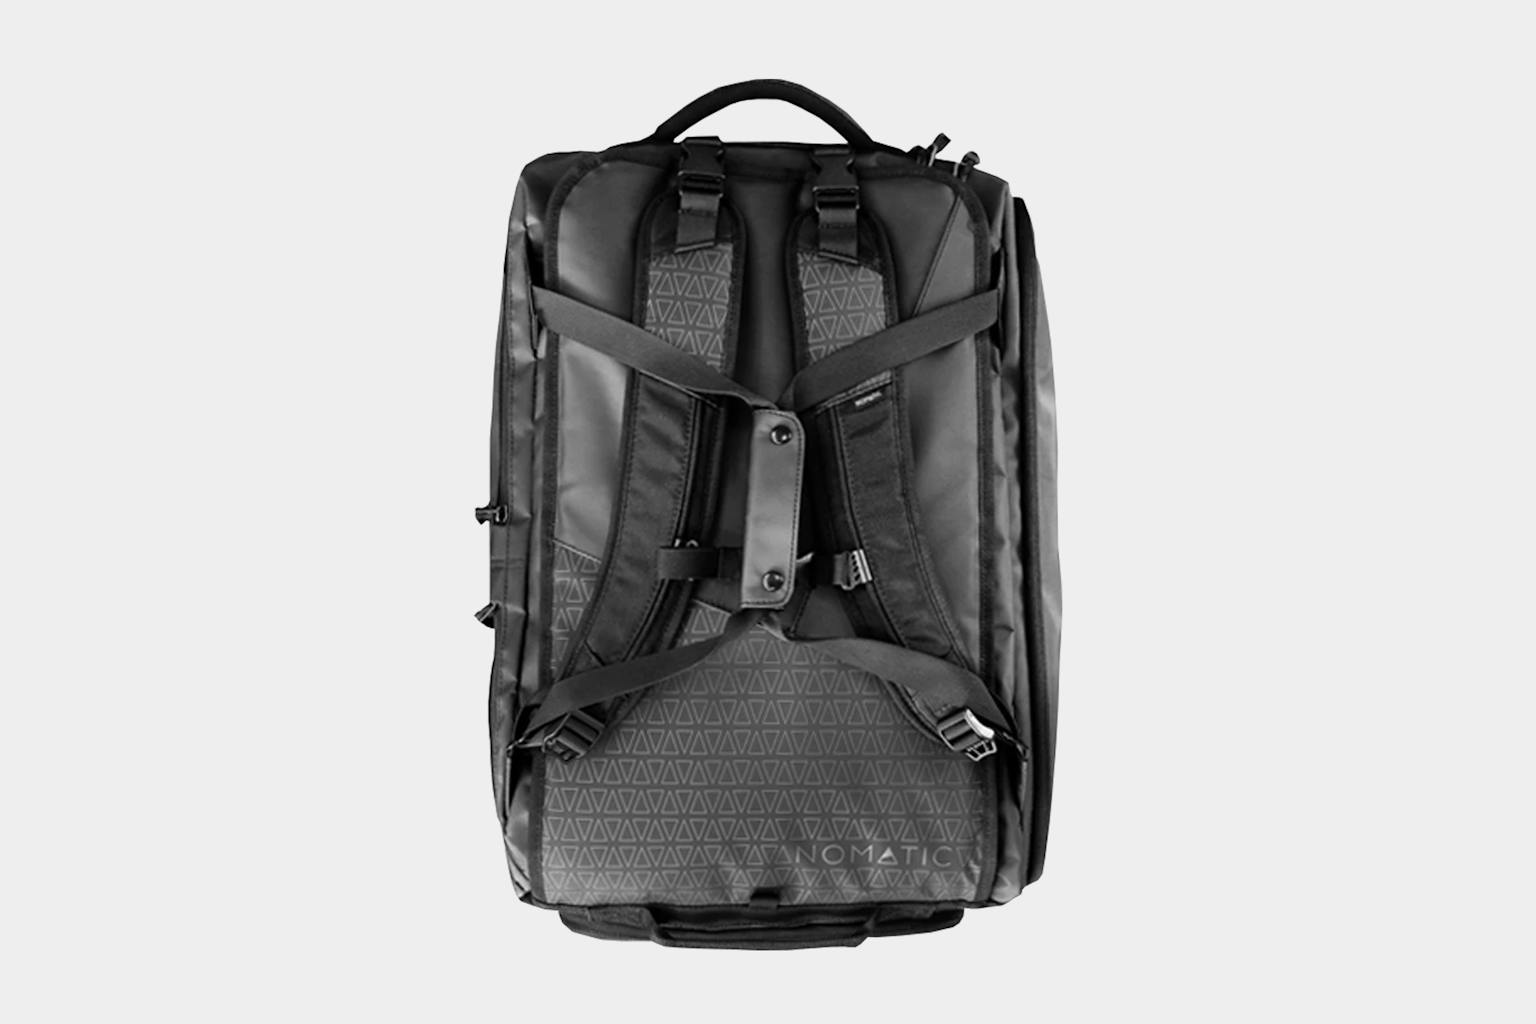 NOMATIC Travel Bag Review (Backpack / Duffel) | Pack Hacker